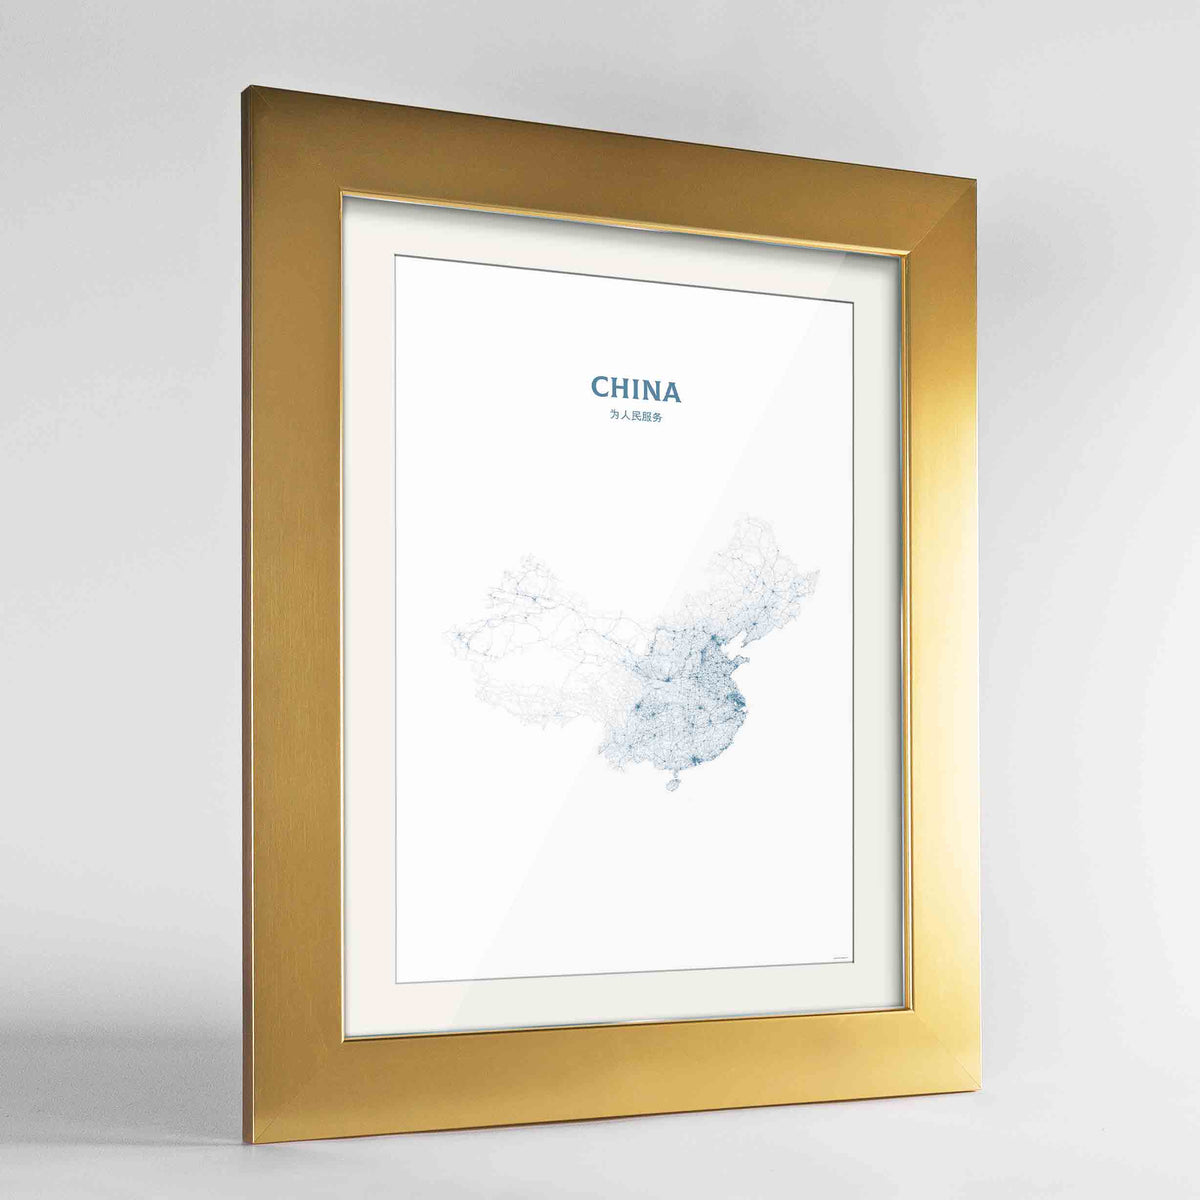 China - All Roads Art Print - Framed